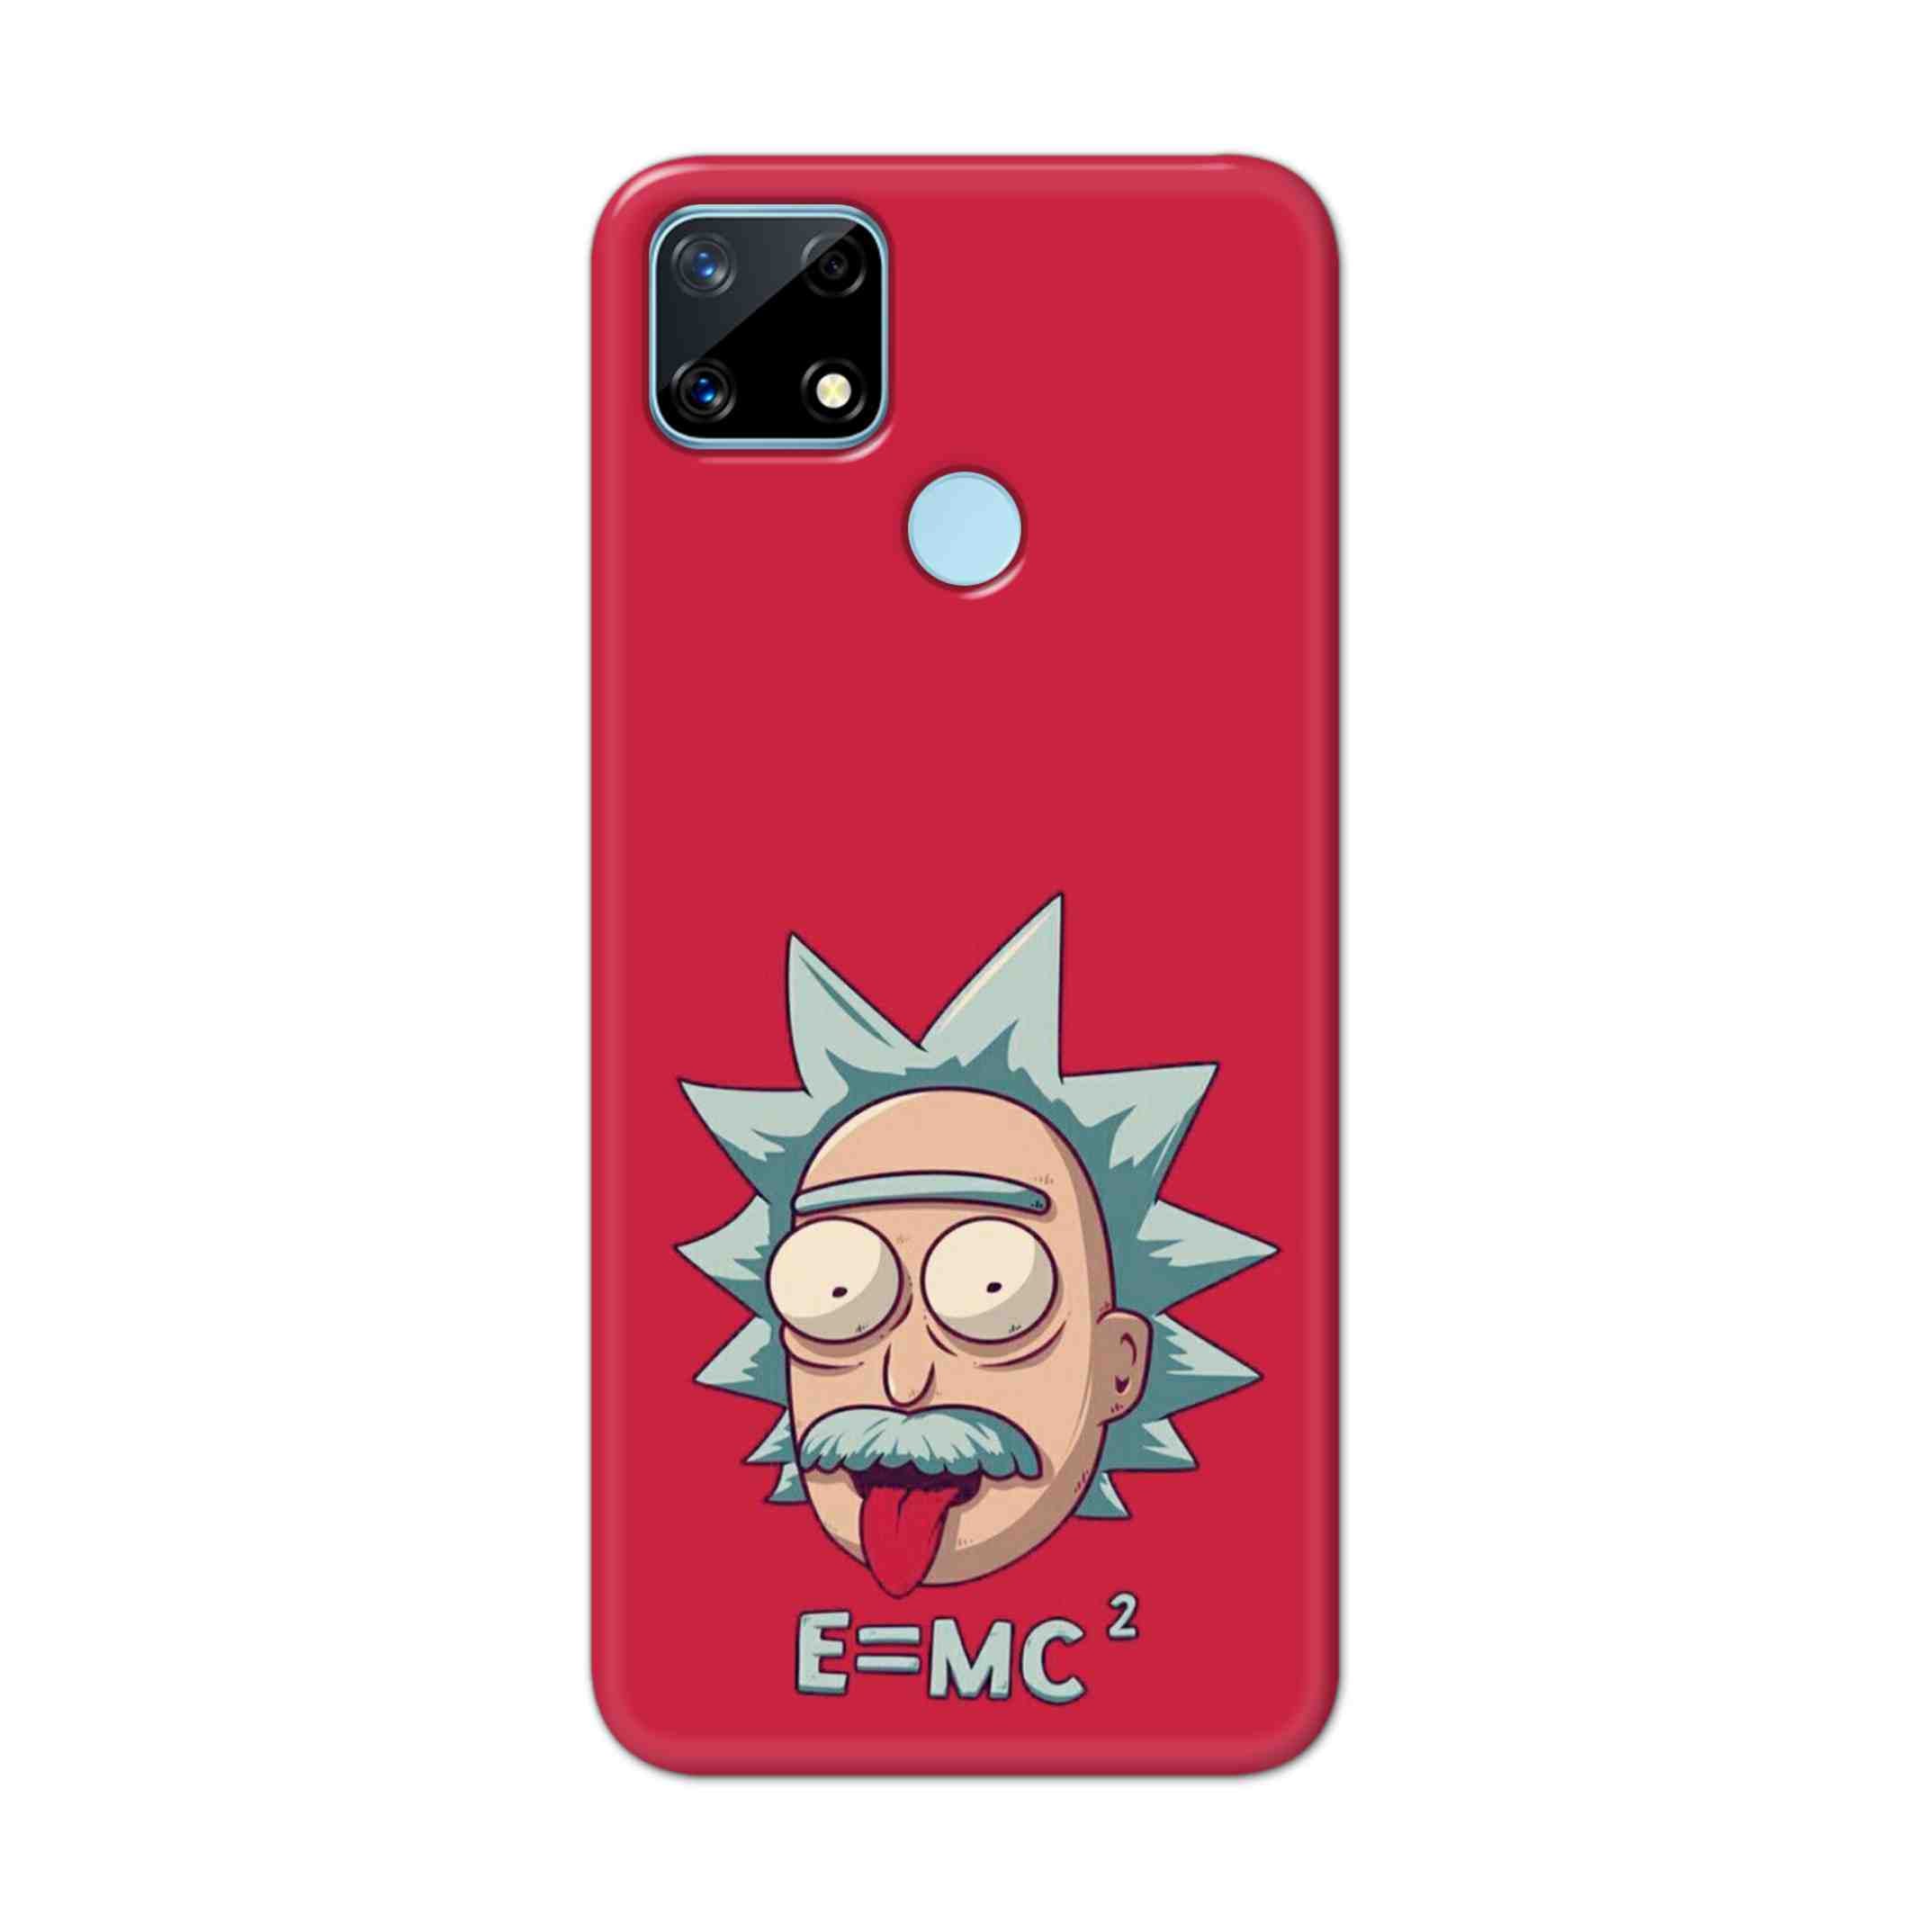 Buy E=Mc Hard Back Mobile Phone Case Cover For Realme Narzo 20 Online